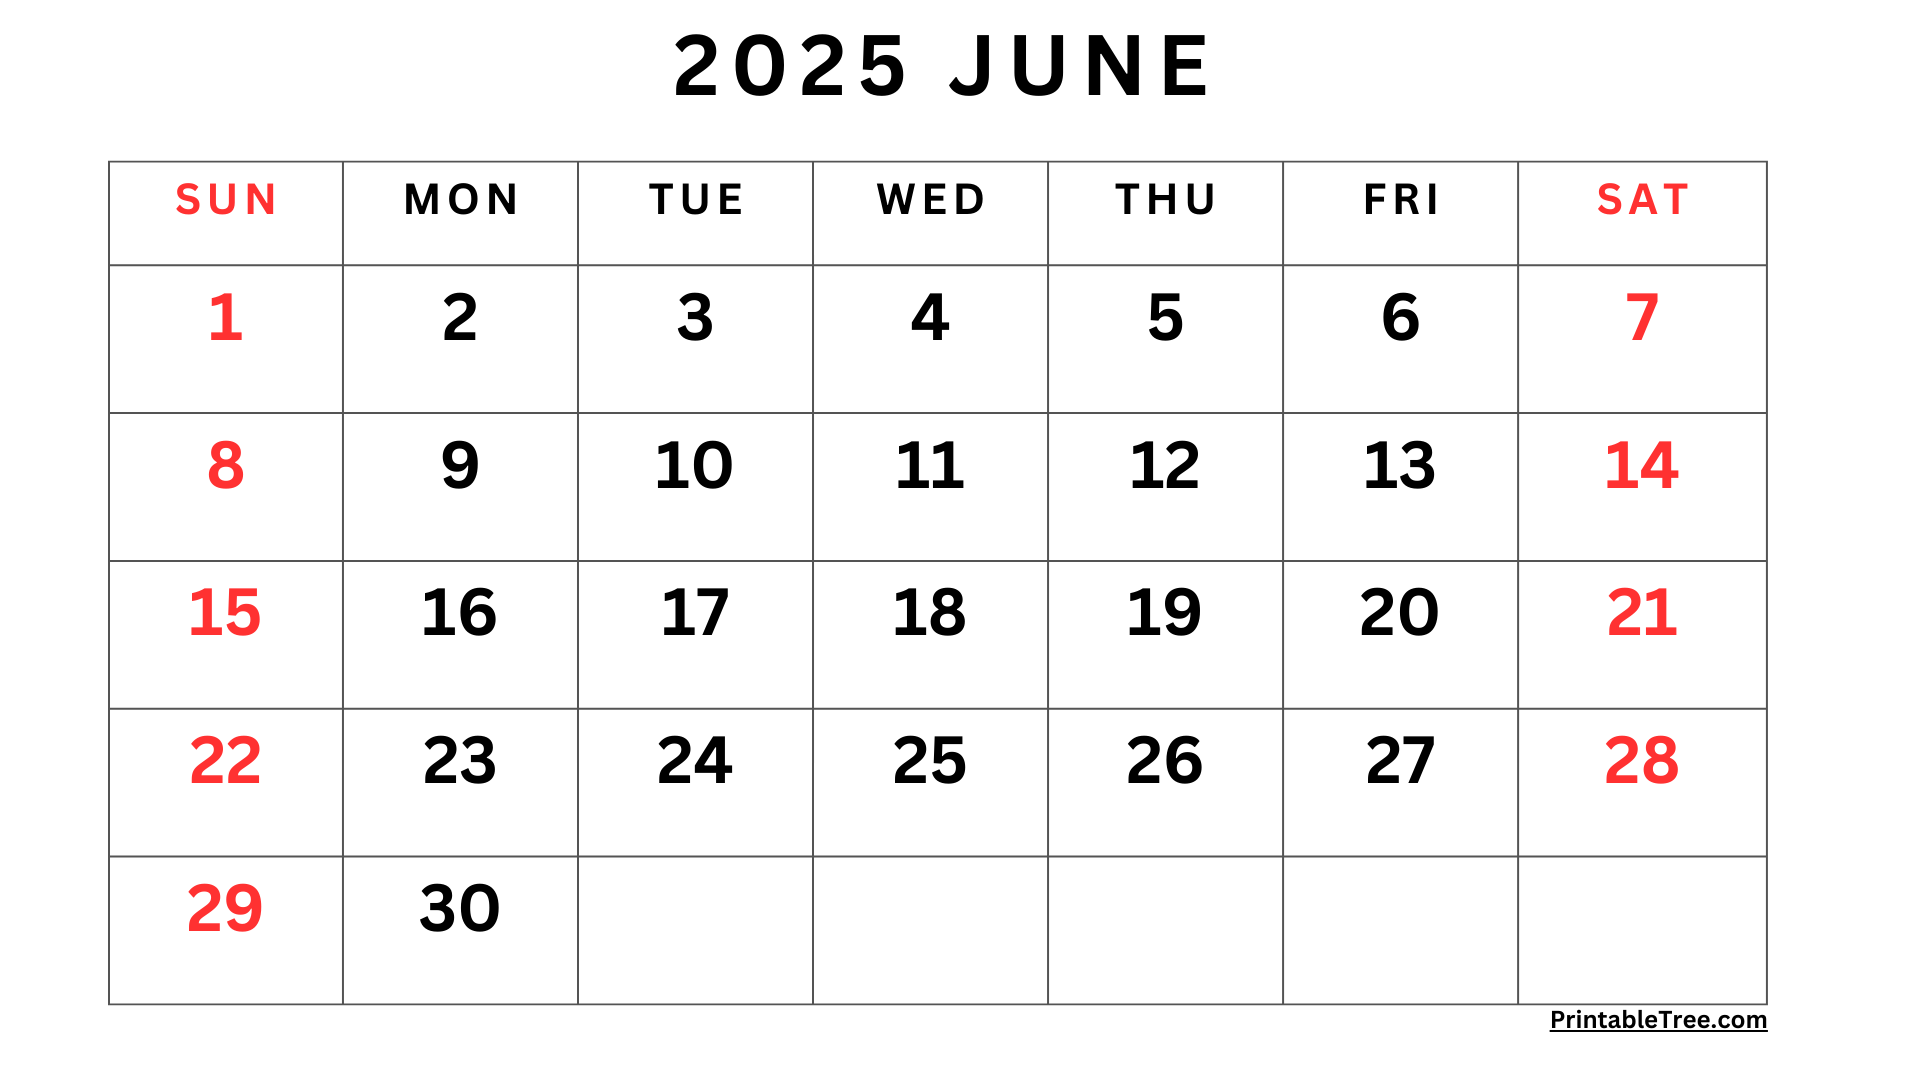 june-2025-lunar-calendar-moon-phase-calendar